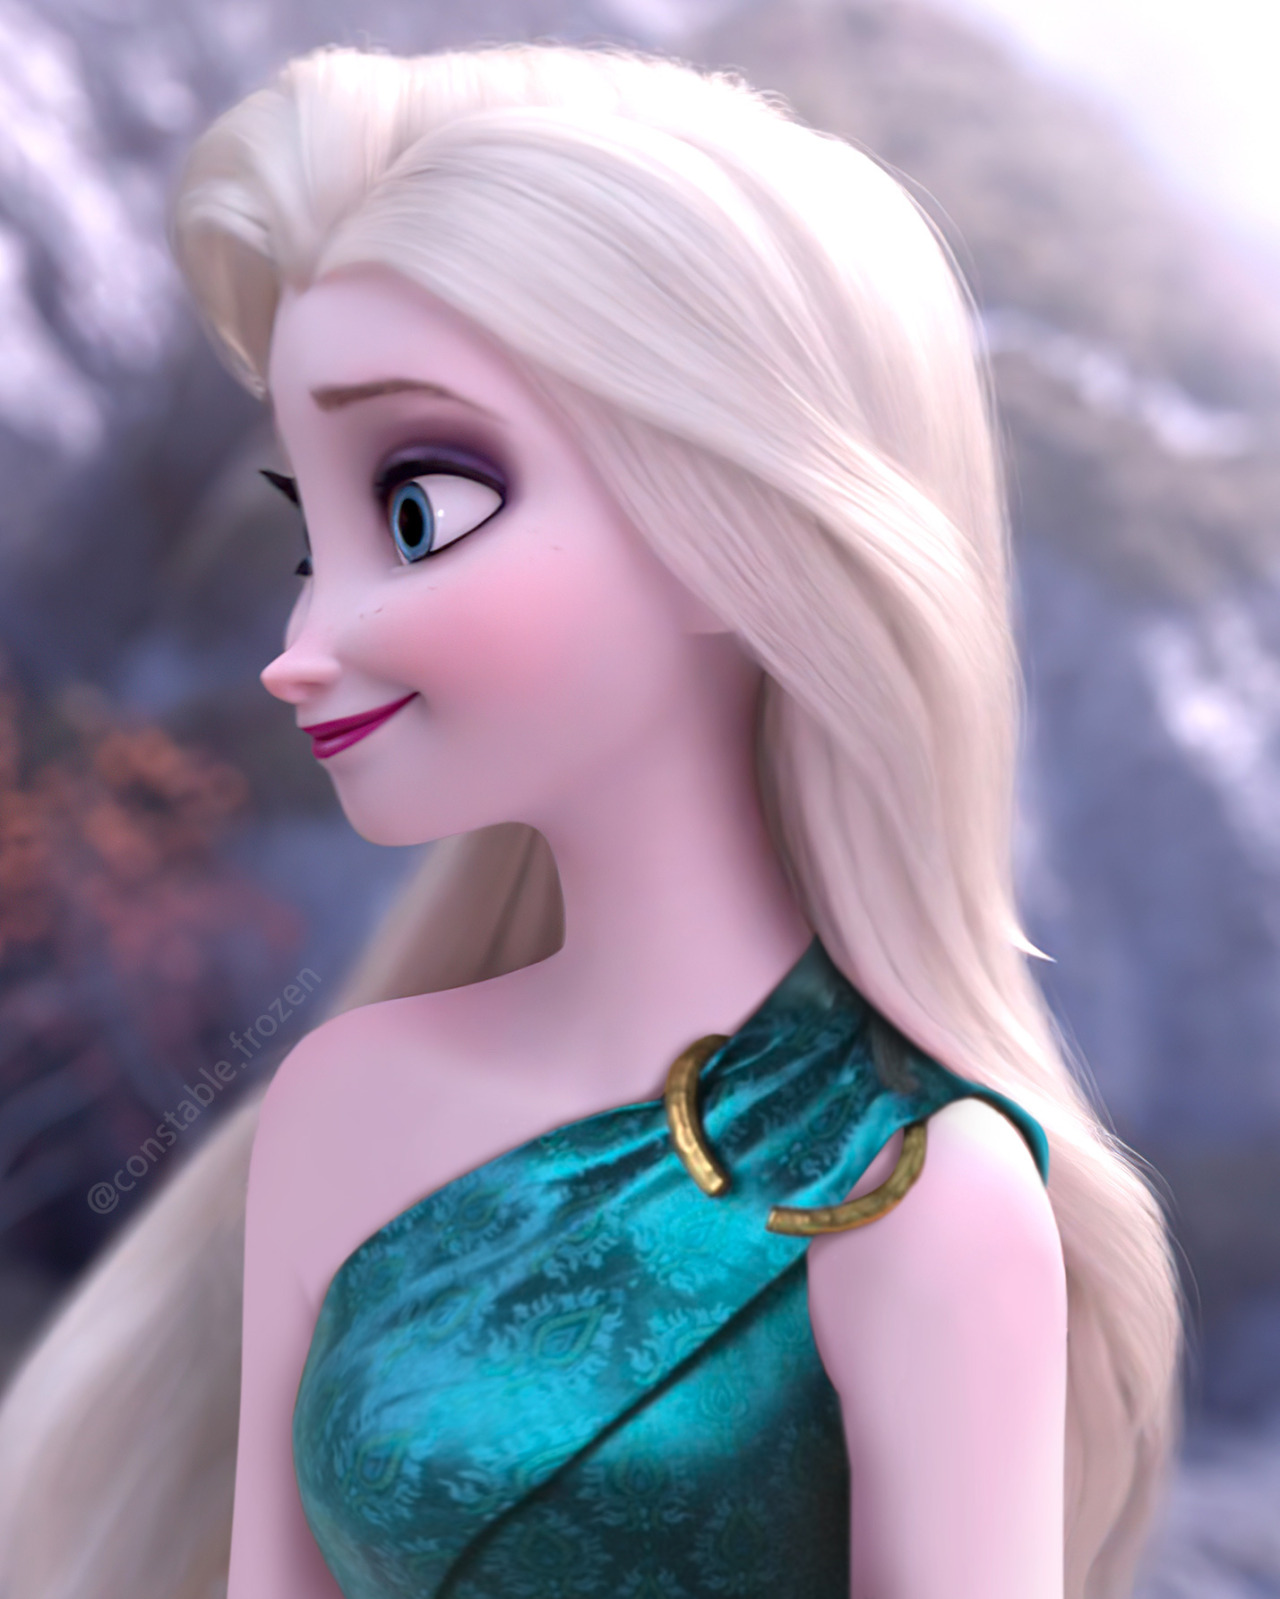 waardigheid Ambassadeur adverteren Elsa in some fantasy outfits - photoshop - YouLoveIt.com